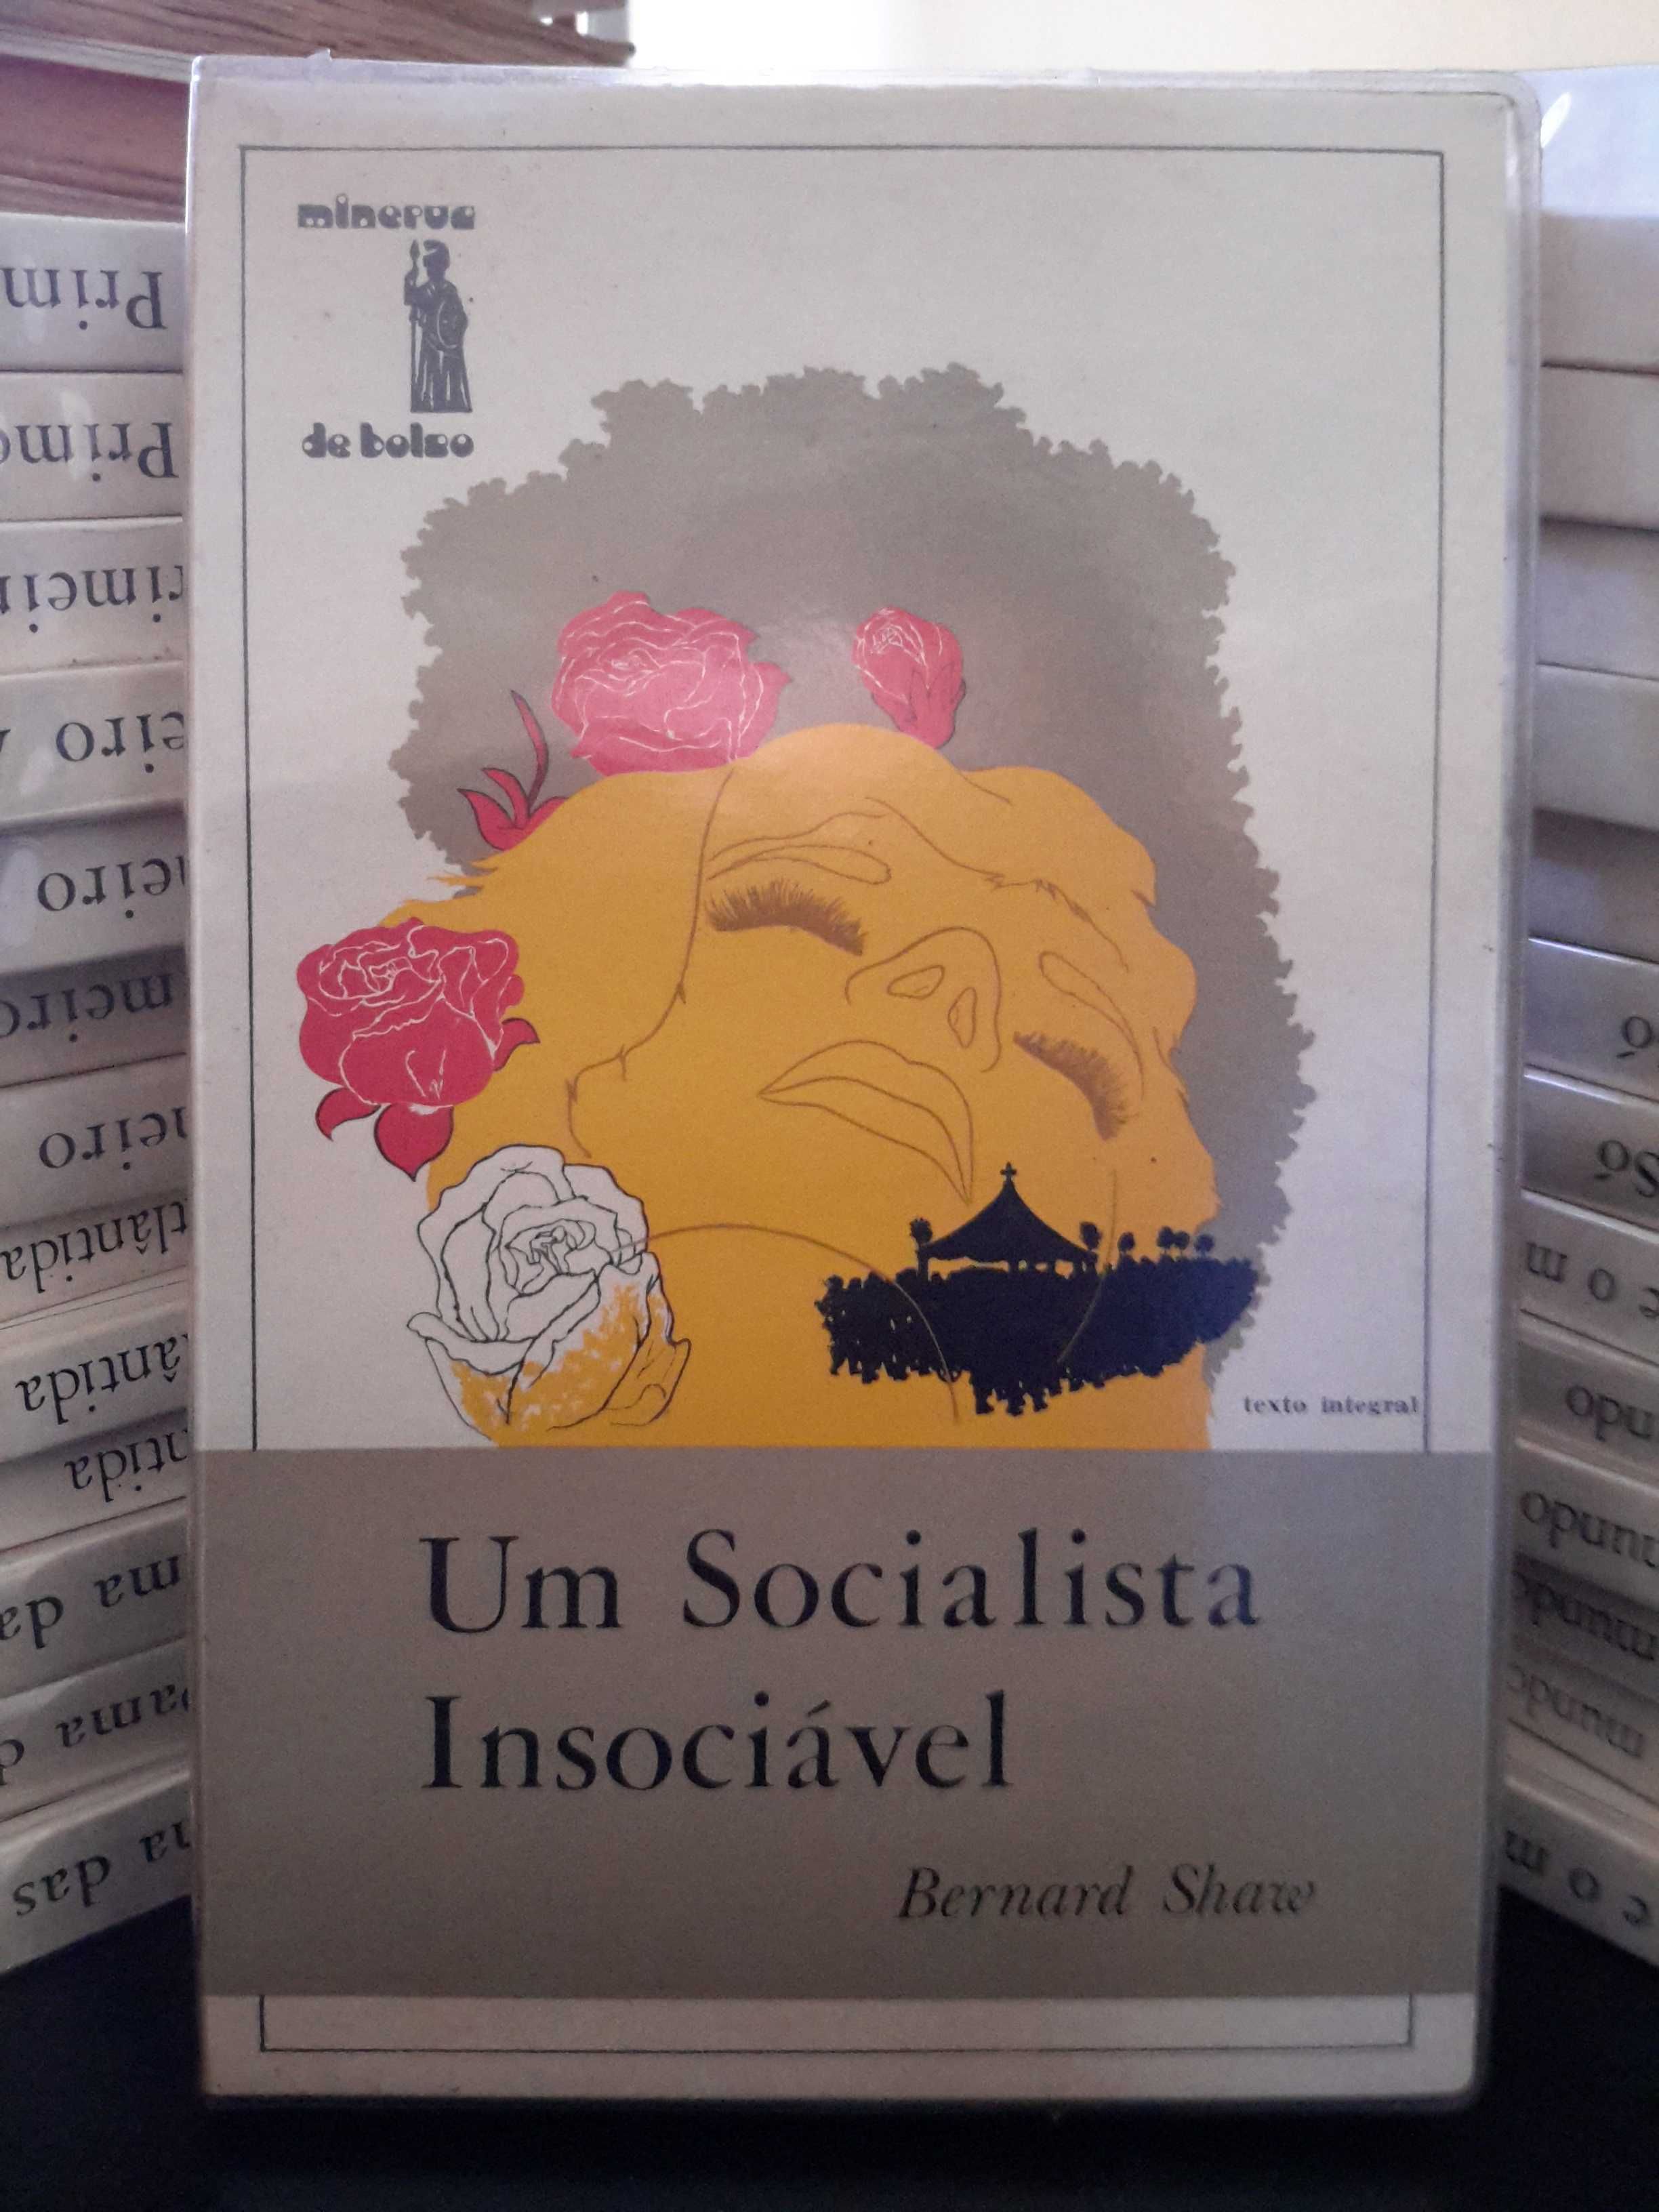 Bernard Shaw - Um Socialista Insociável